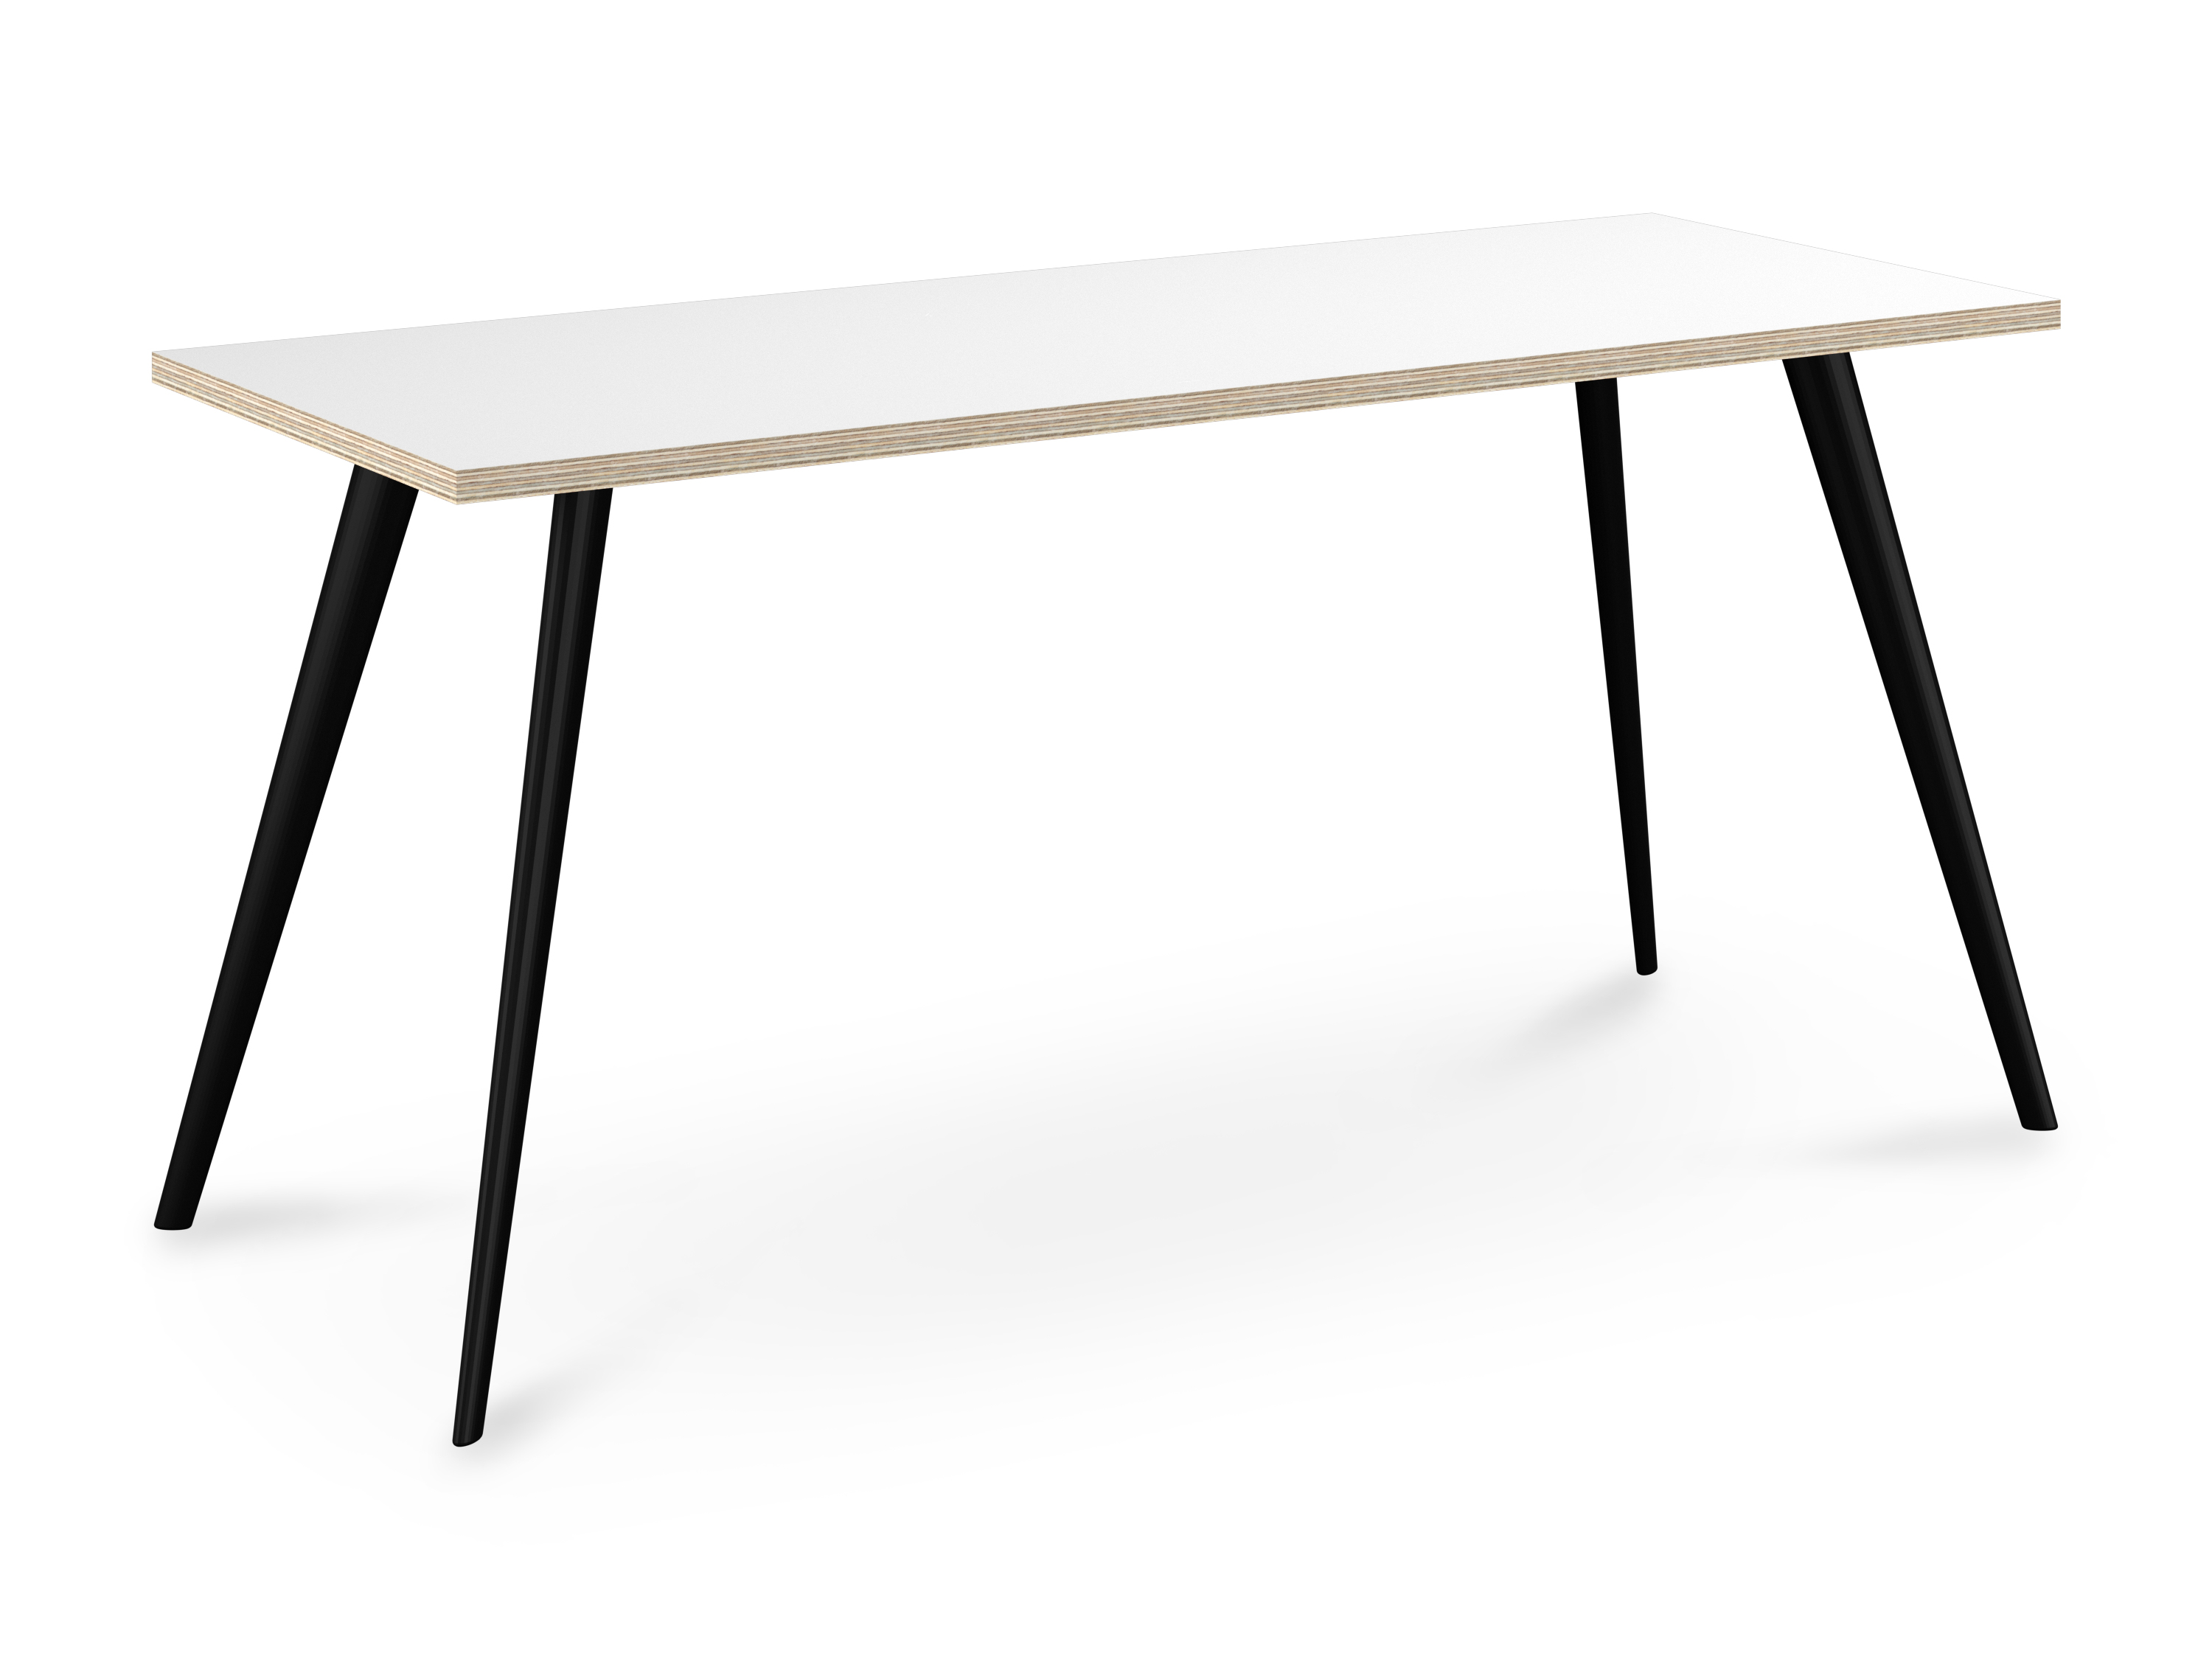 WS - Air desk - Black legs, White Acrylic Ply